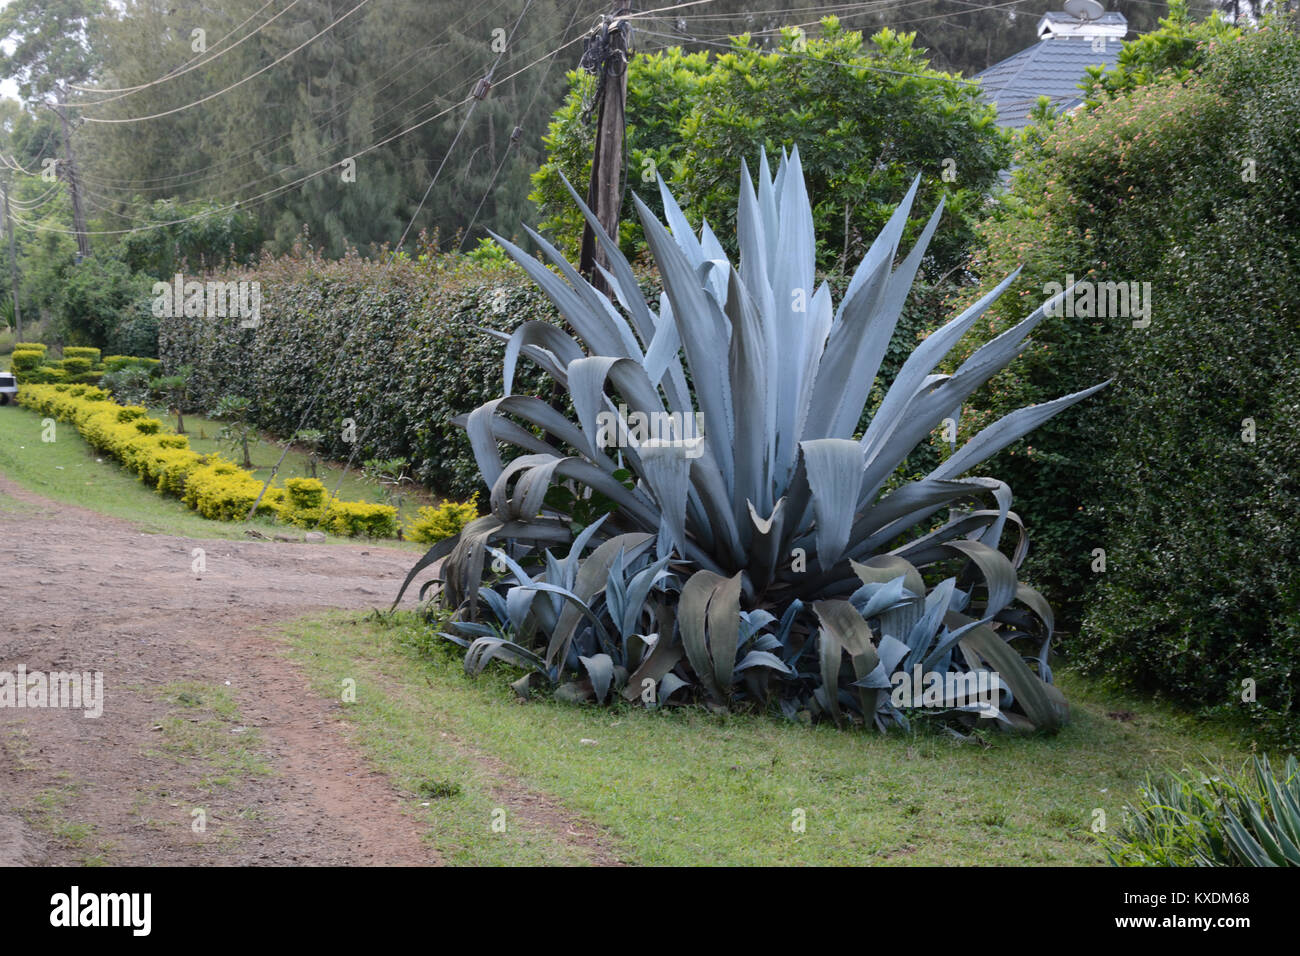 Sisal plant on roadside, Marula Lane, Karen, Nairobi, Kenya Stock Photo